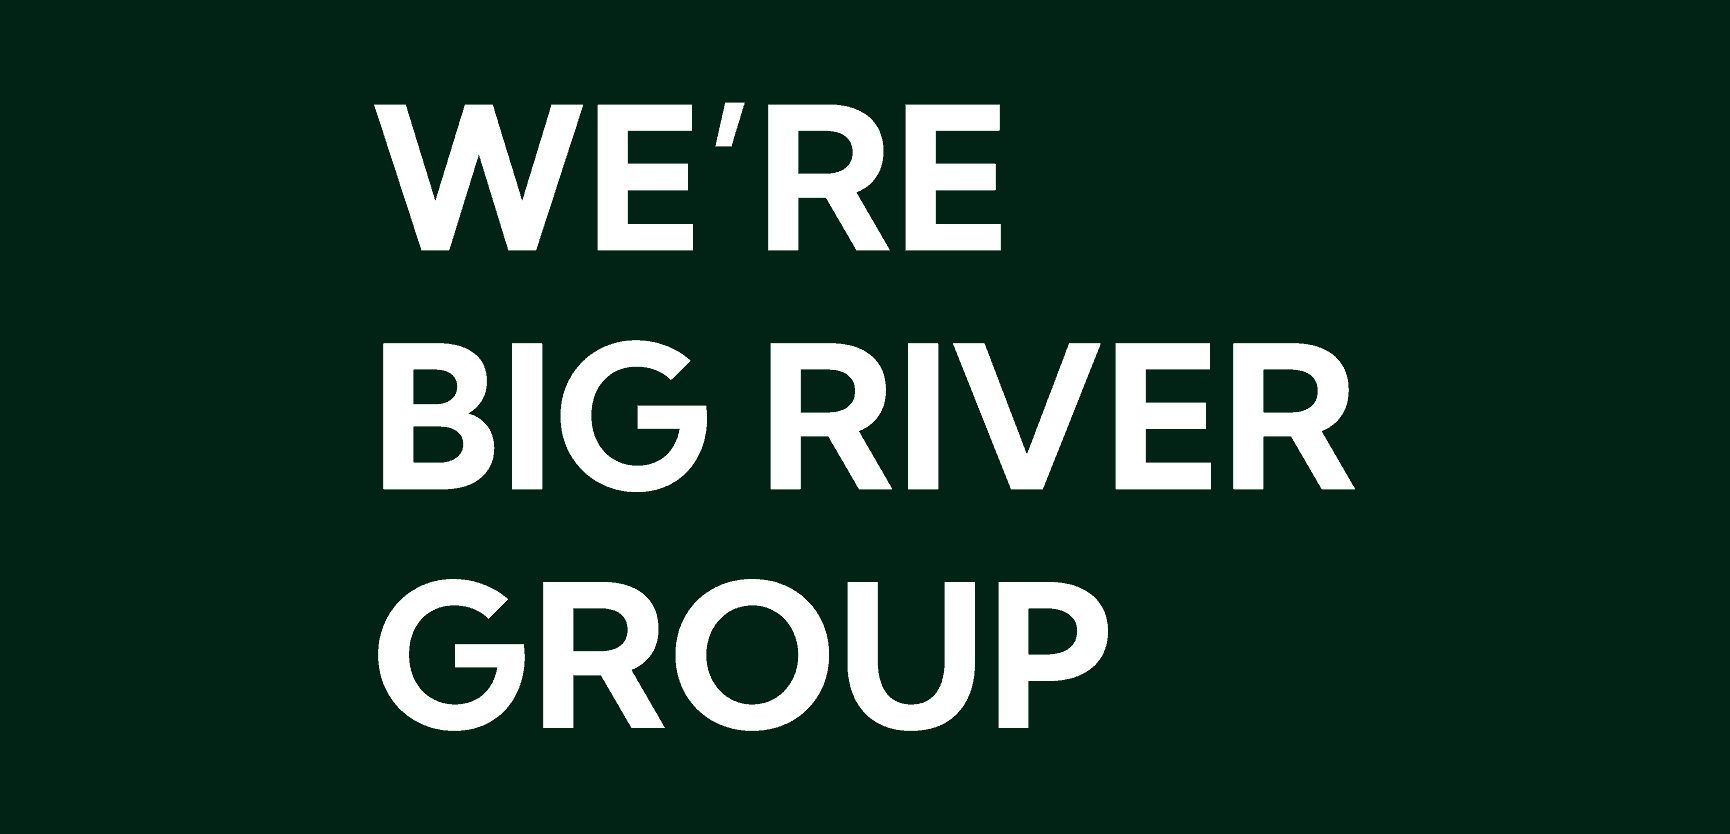 We're Big River Group